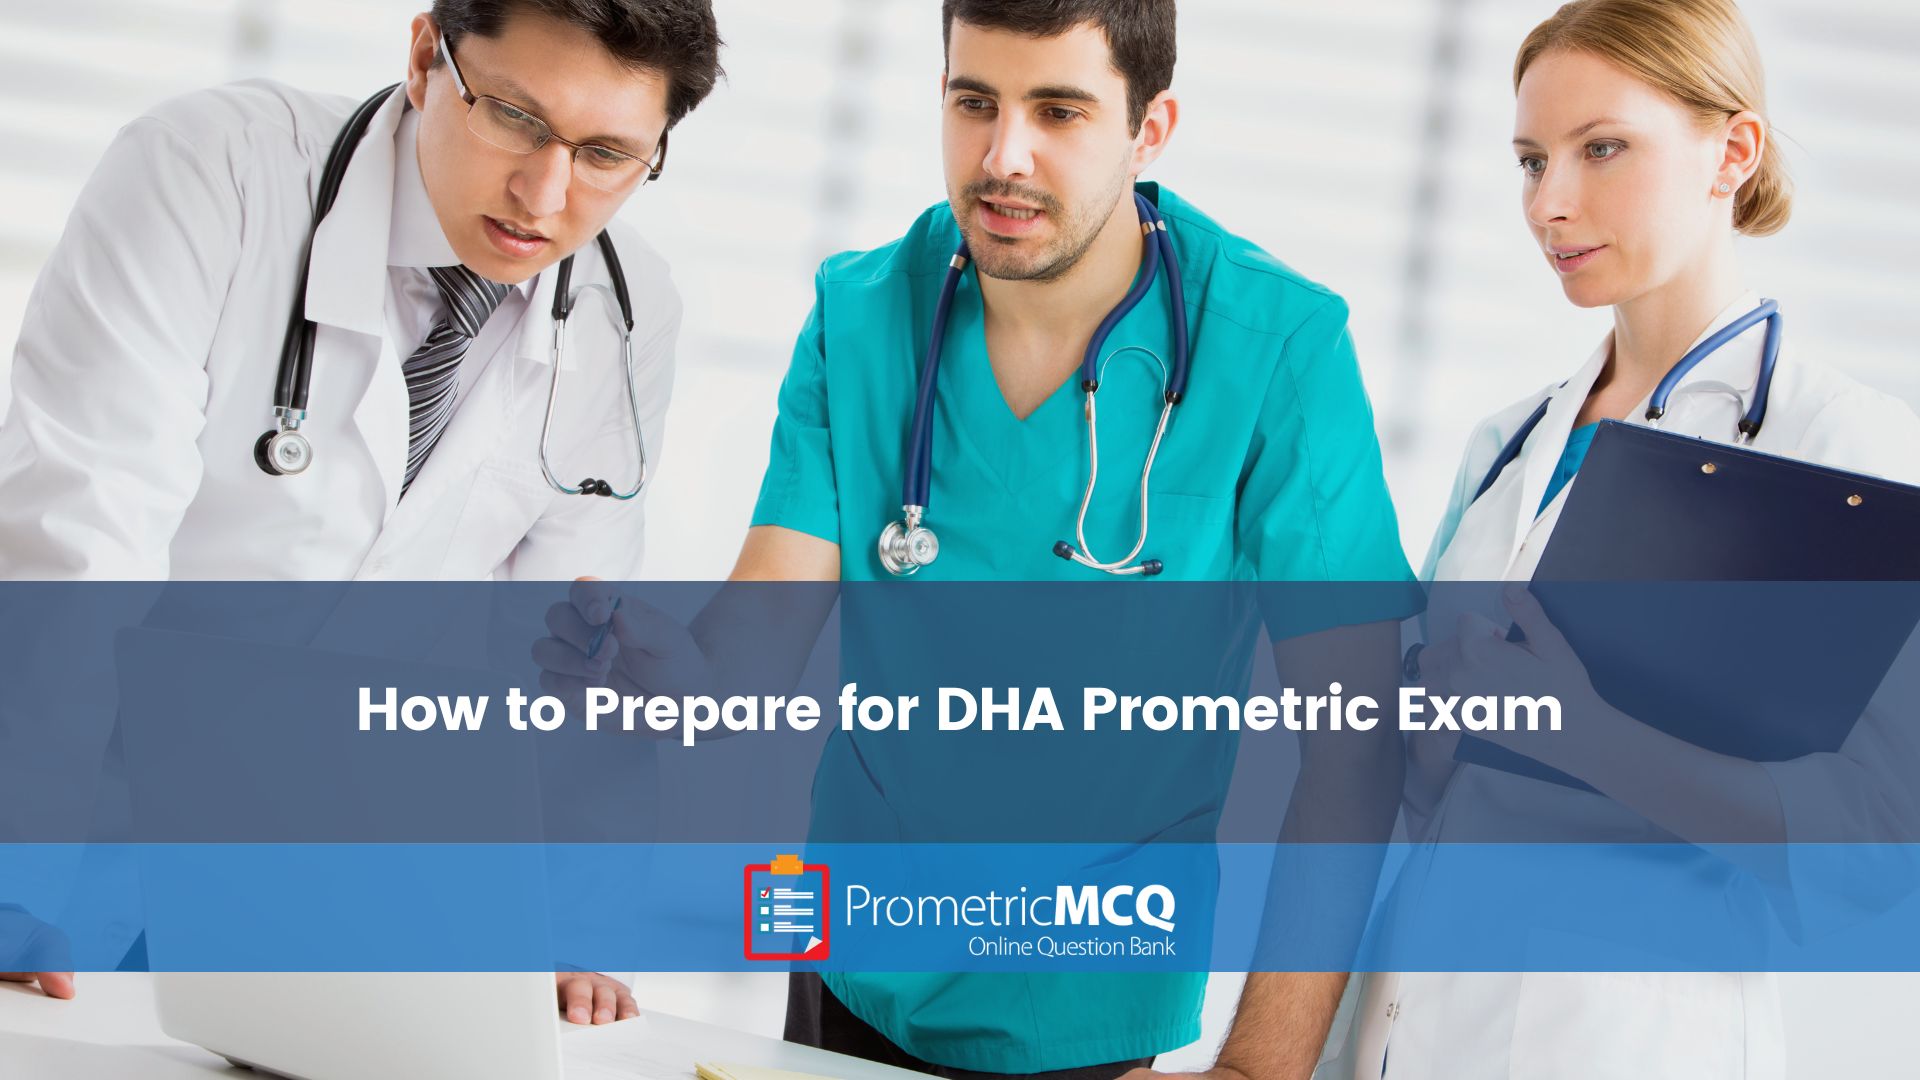 How to Prepare for DHA Prometric Exam